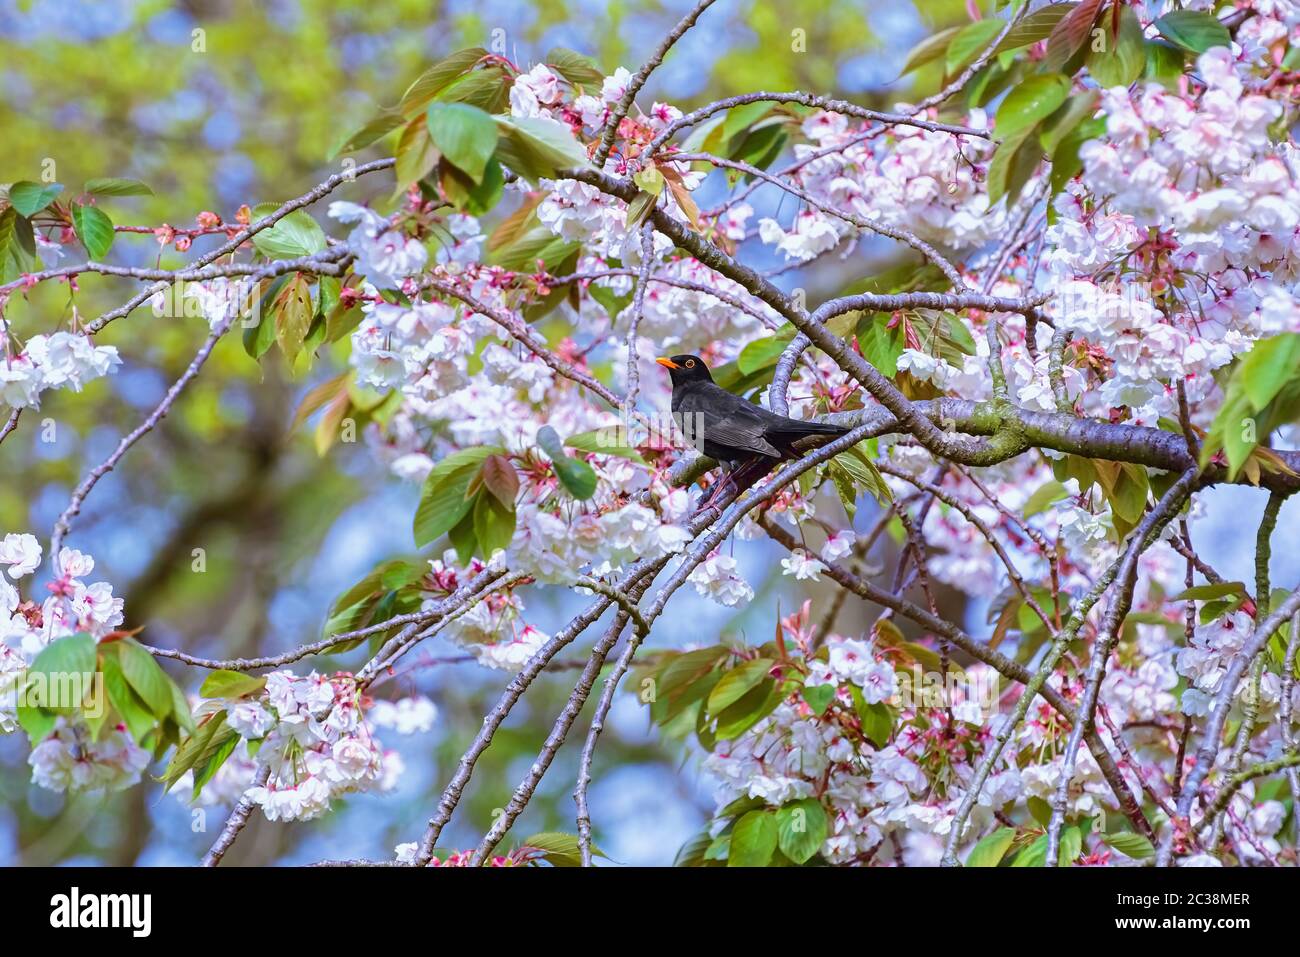 Common blackbird on a branch Stock Photo